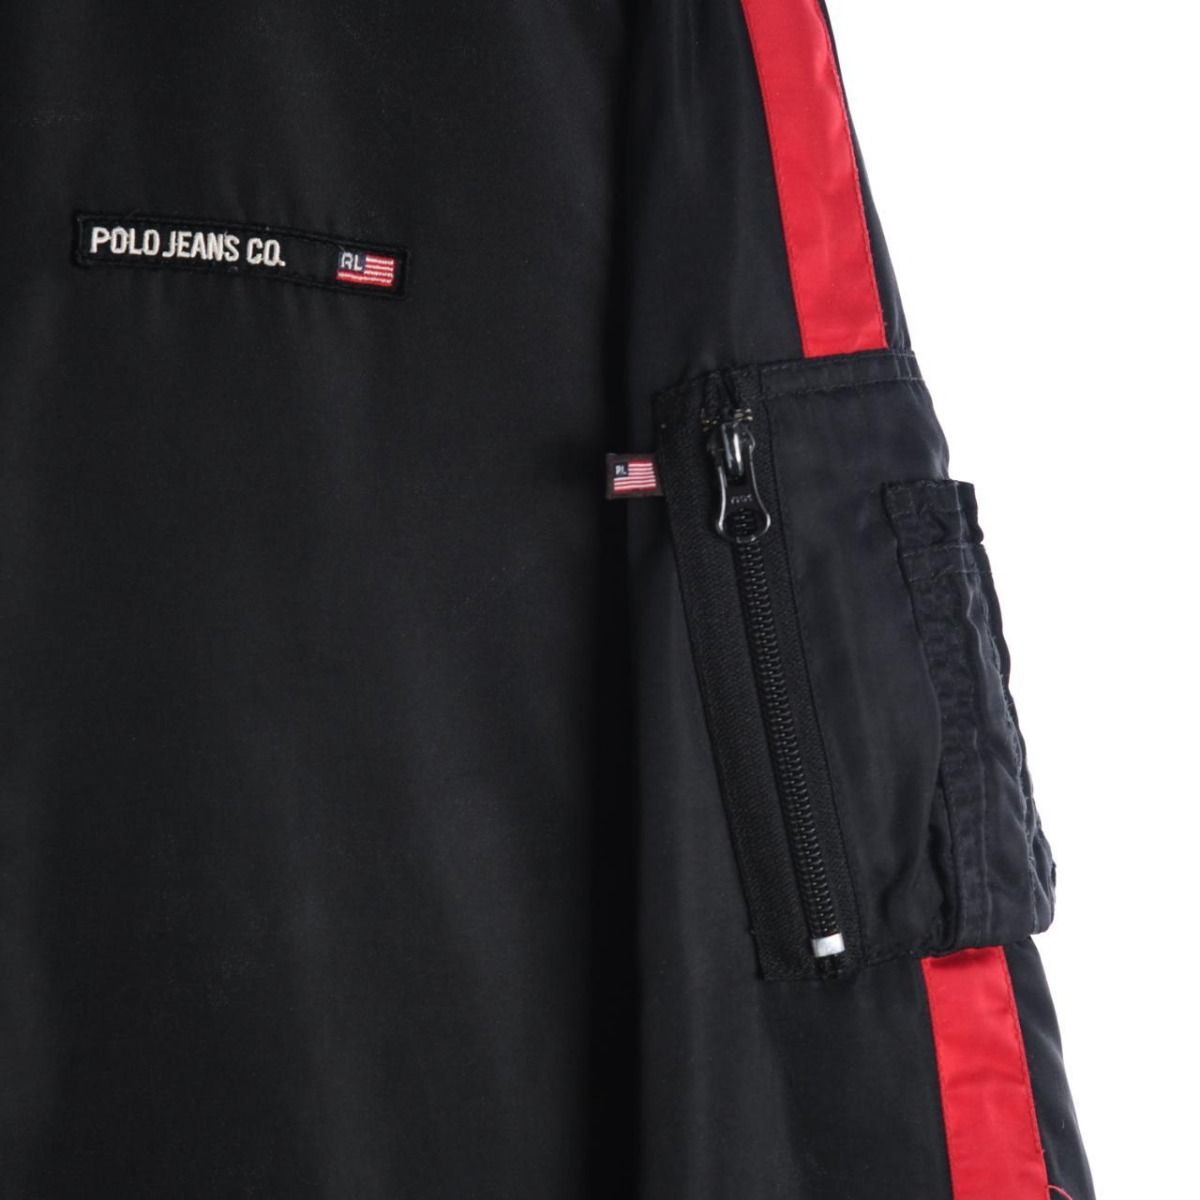 Ralph Lauren Polo Jeans Bomber Black Jacket